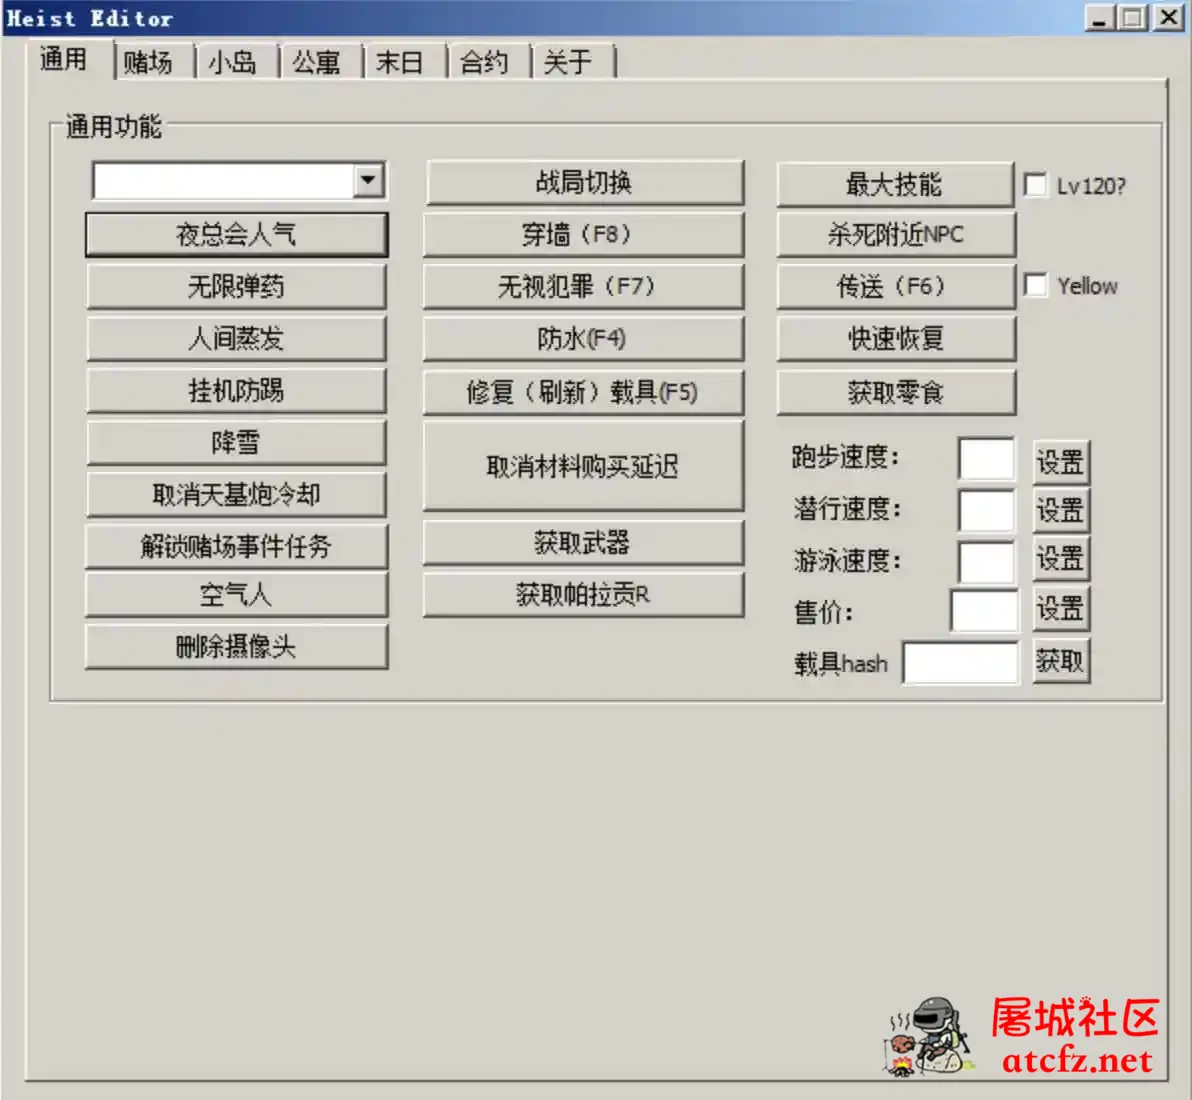 GTA5 Heist Editor外部抢劫编辑器 v3.5.7 屠城辅助网www.tcfz1.com647